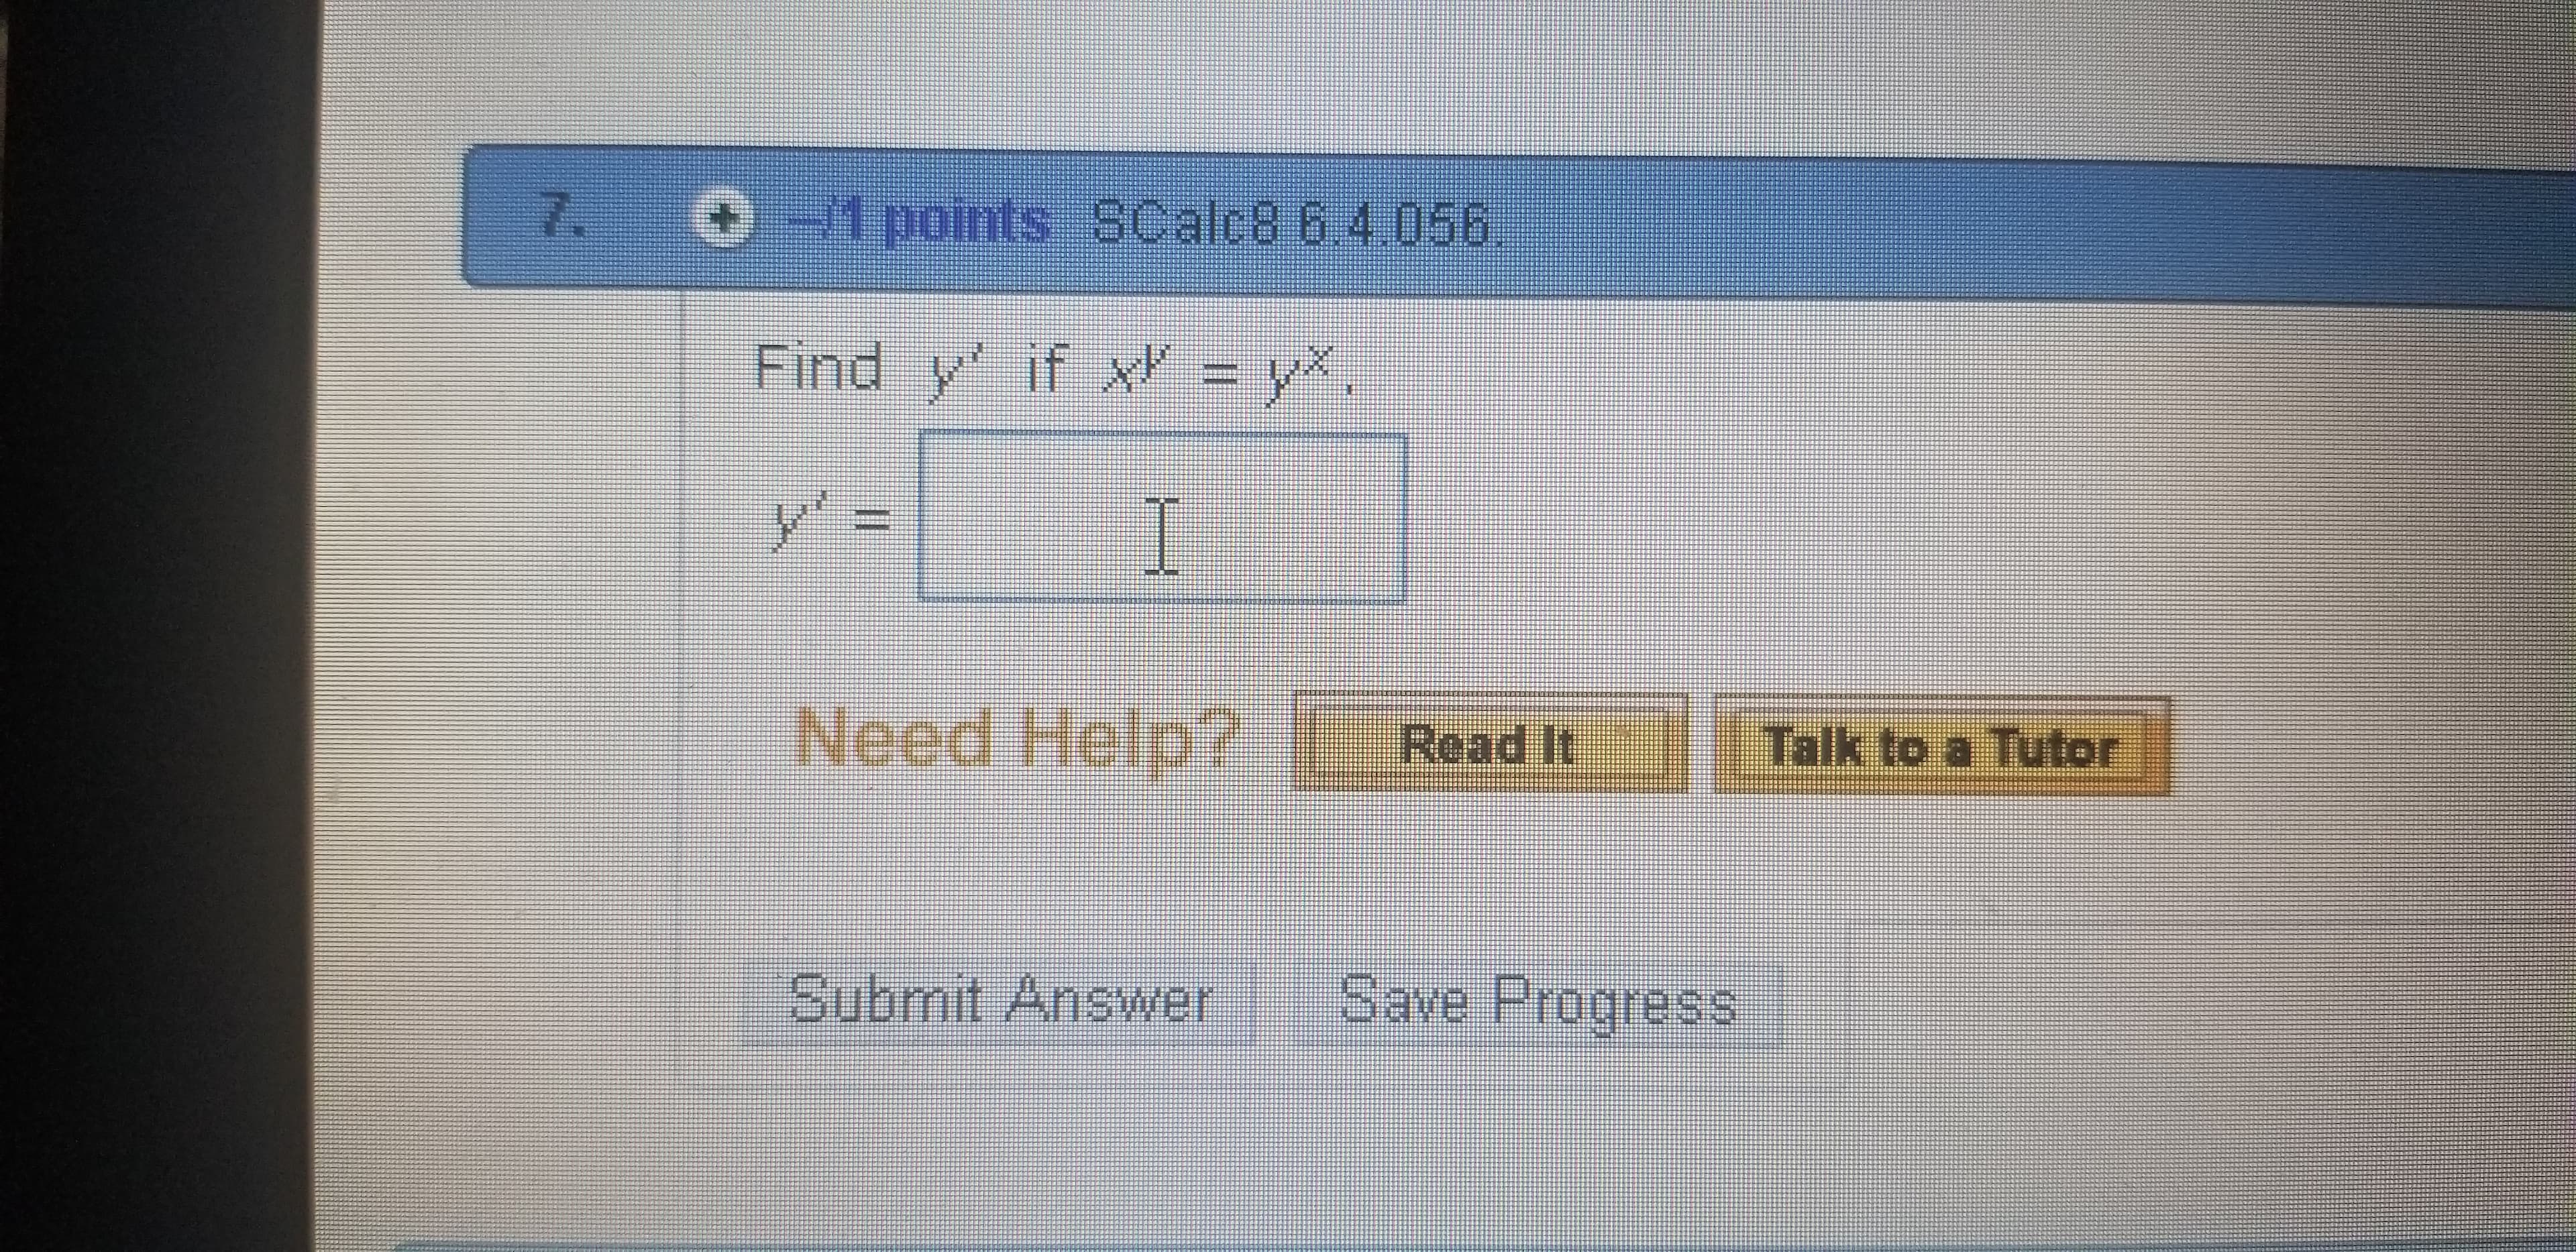 7
9-1points SCalcB 6 4.056
Find y if x = y
y
I
Need Help Read It Talk to a Tutor
Submit Answer
Save Progress
